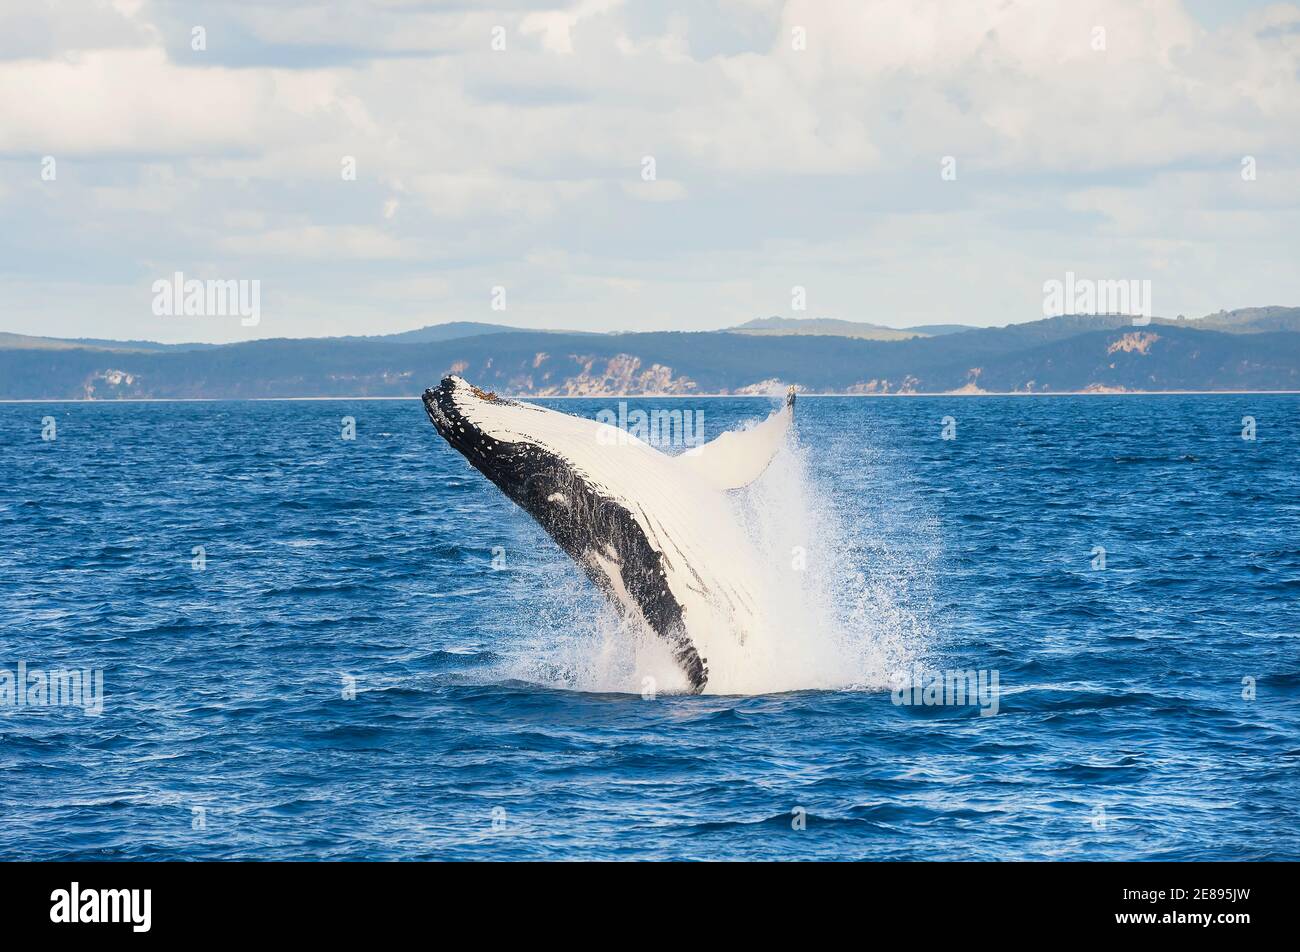 Humpback whale (Megaptera novaeangliae) breaching, Hervey Bay, Queensland, Australia Stock Photo